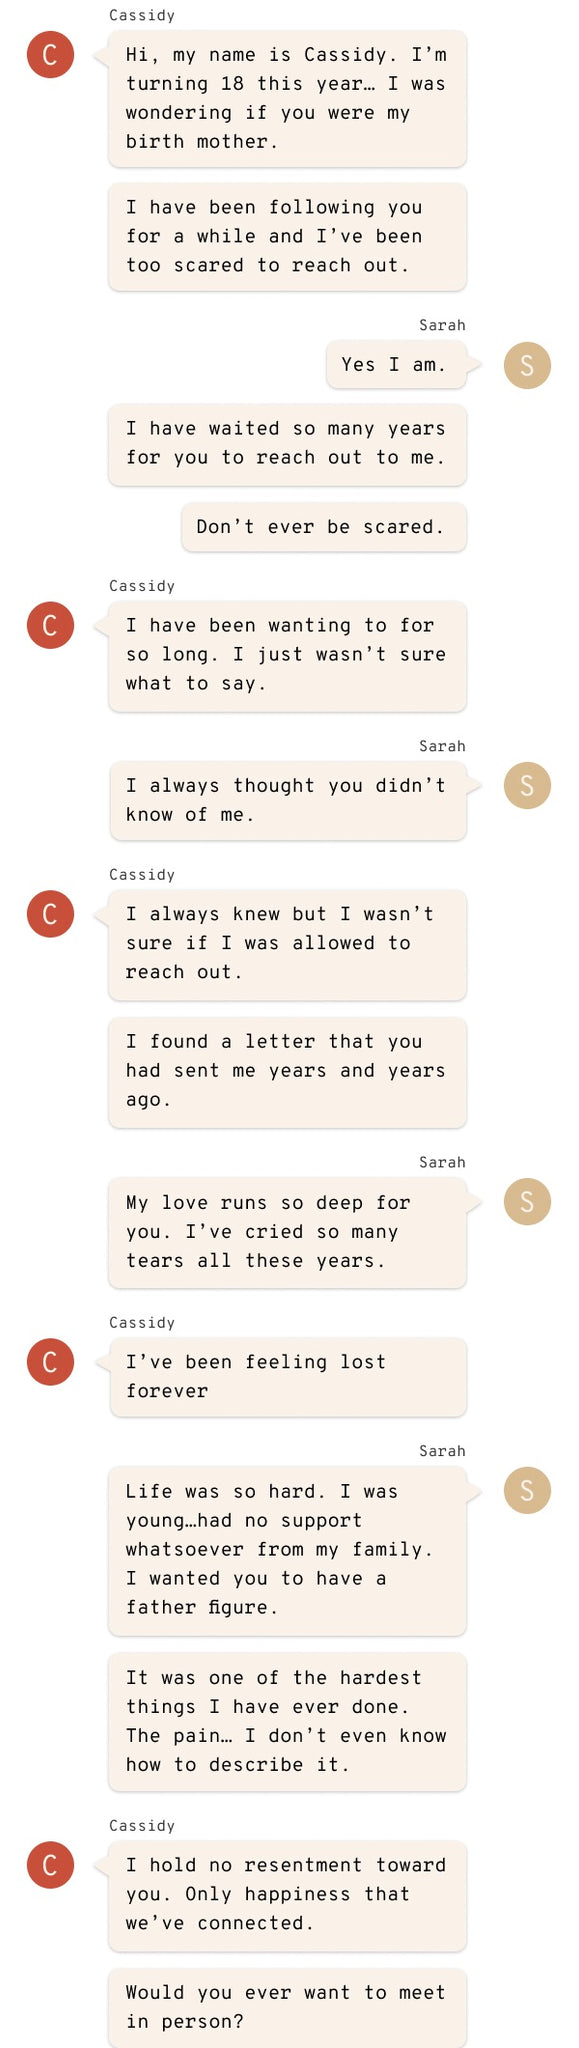 A text conversations between Cassidy and Sarah.